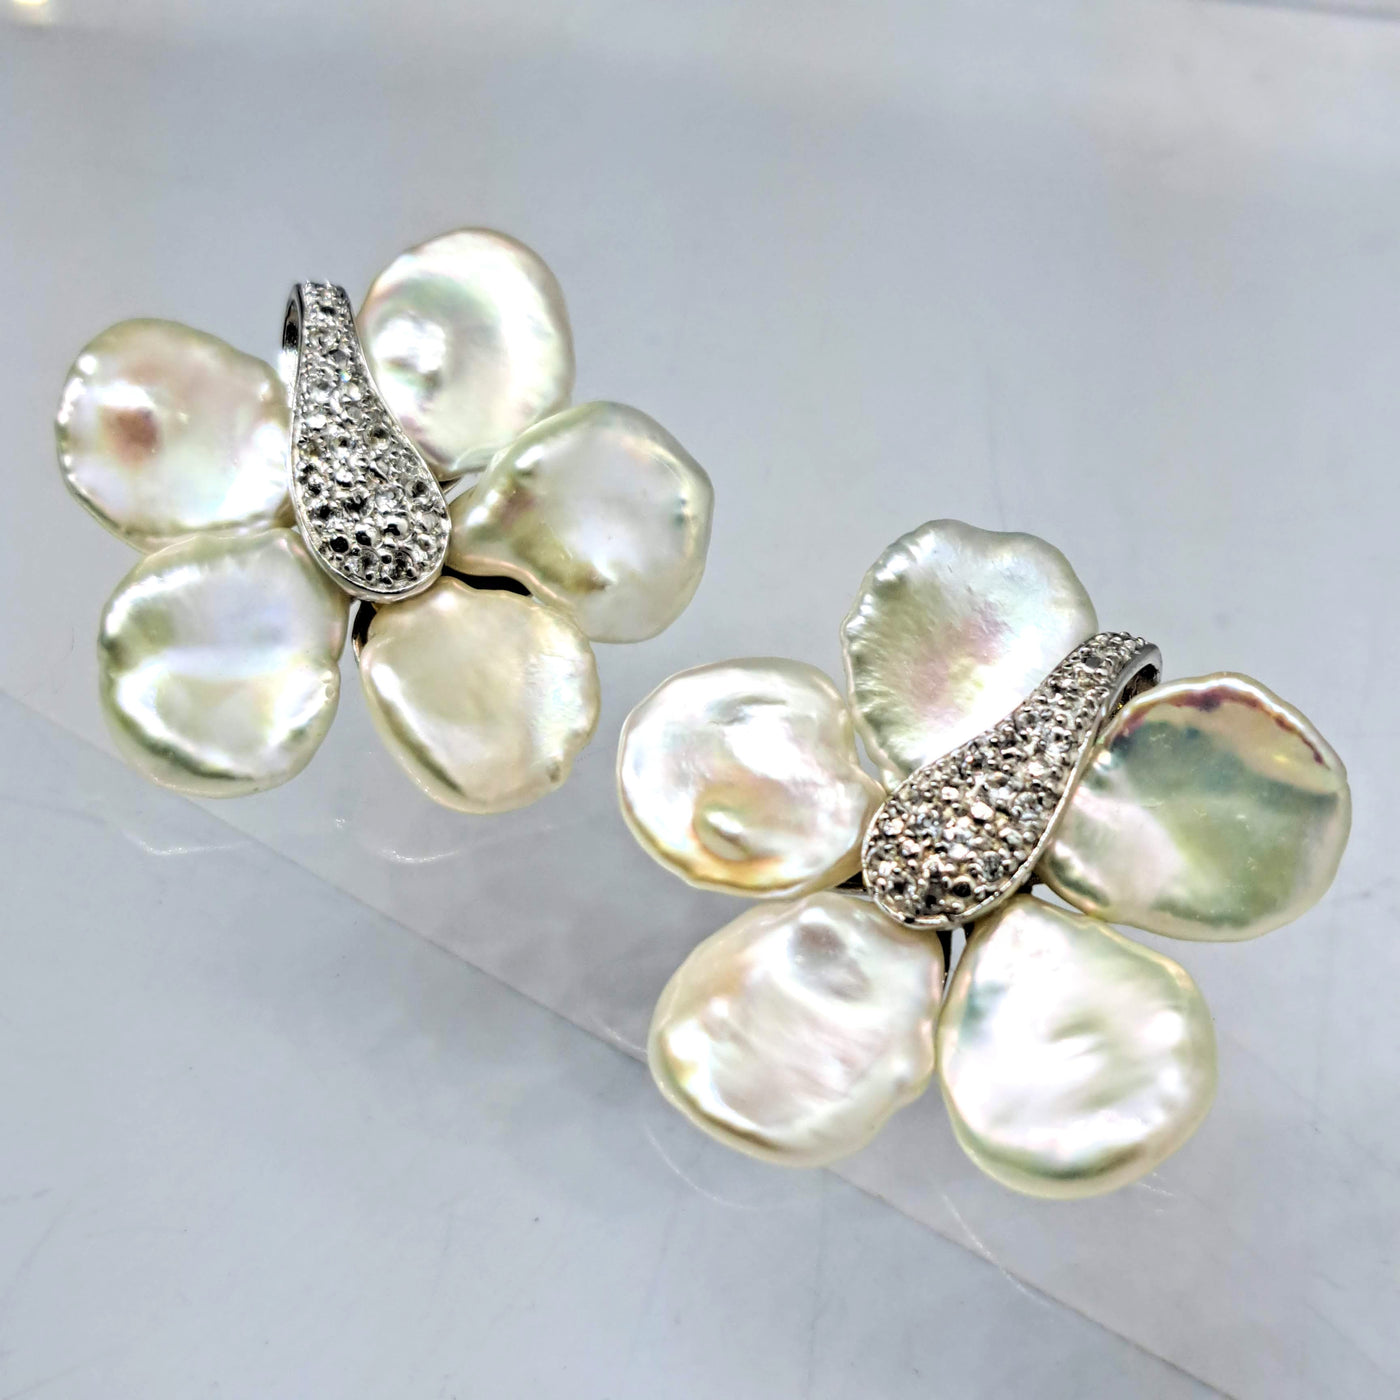 "Mind Bloom" 1.5" Earrings - Petal Pearls, White Topaz, Sterling (Anti-tarnish treated)